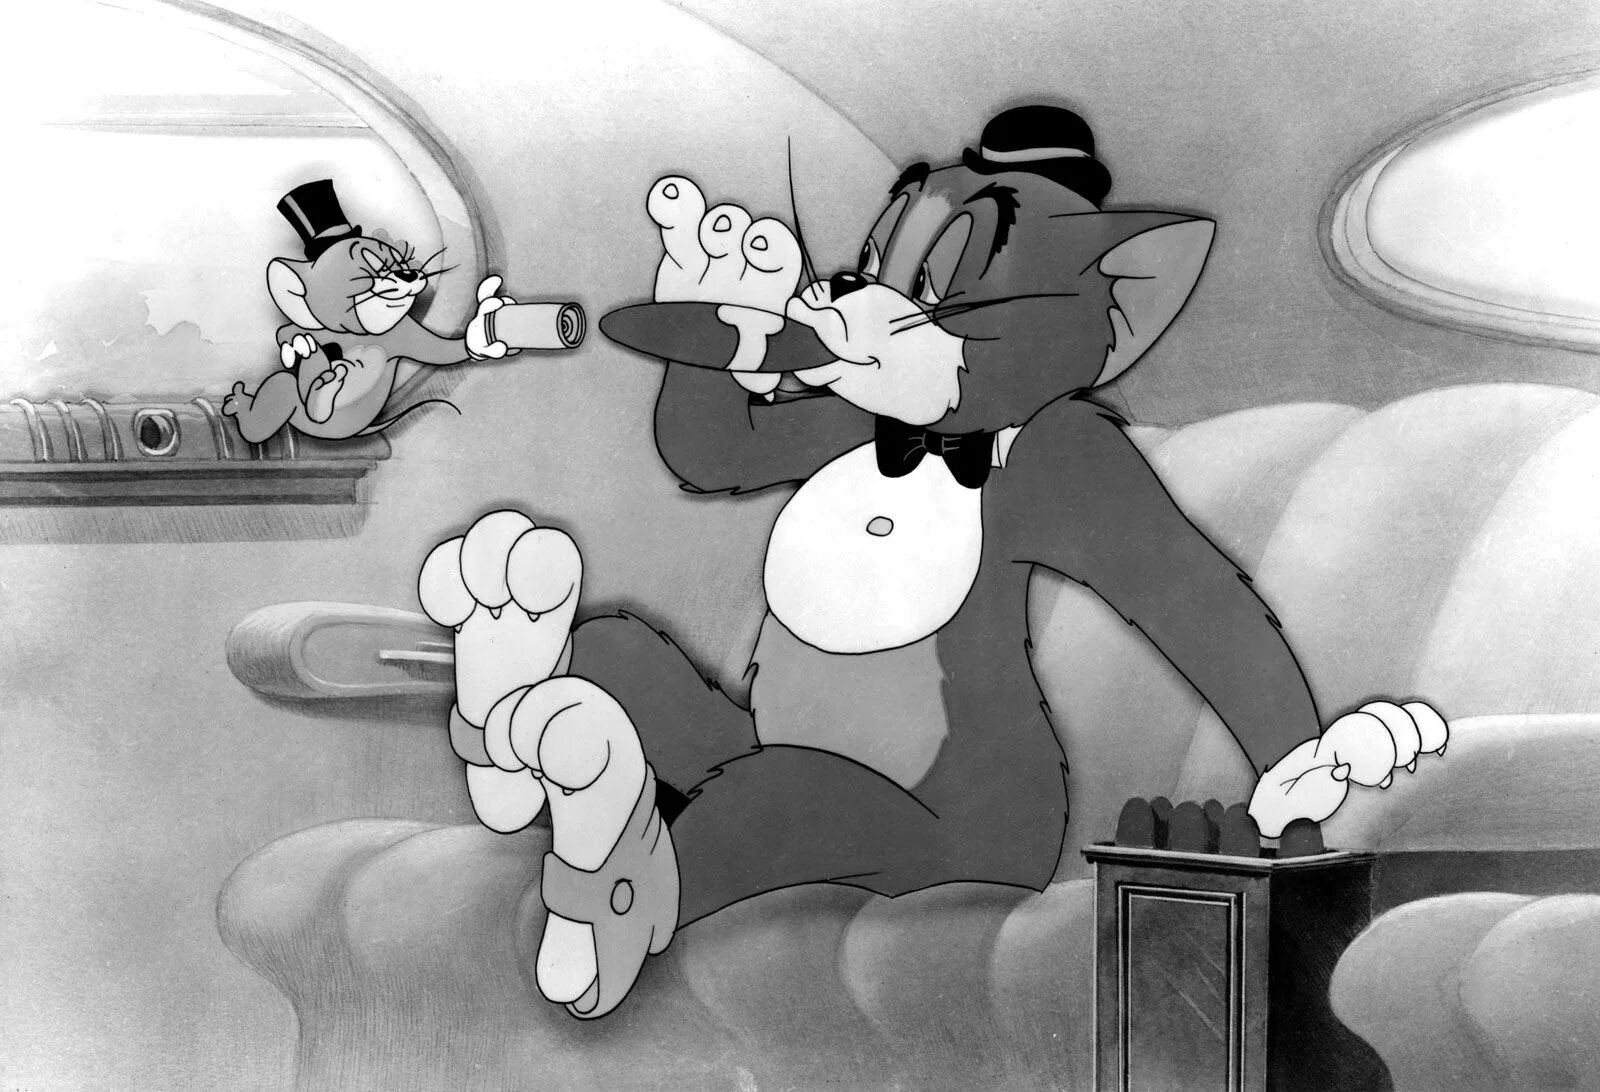 Tom and Jerry 1960. Tom and Jerry 1930. Том с сигаретой том и Джерри. Курящий том из Тома и Джерри. Джерри бит